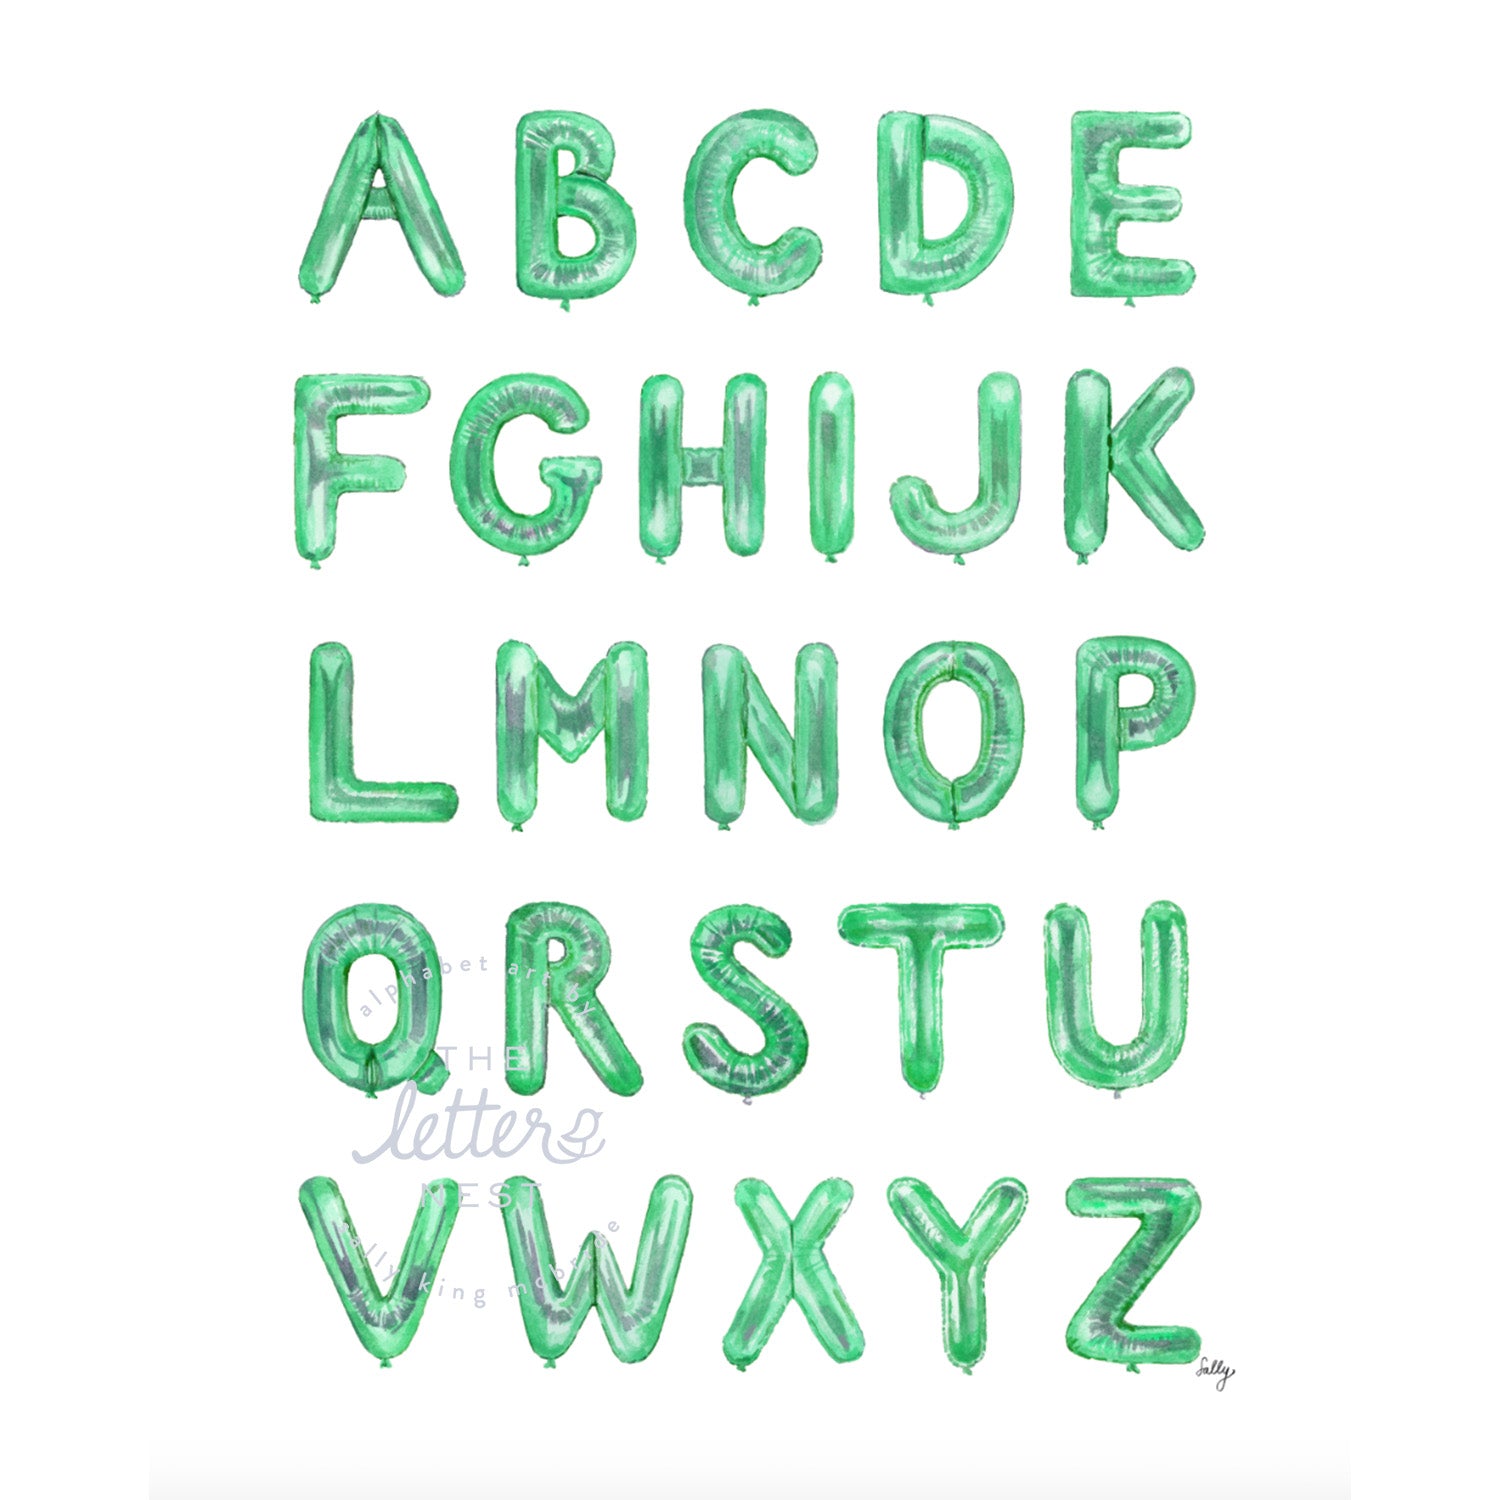 Green Balloon Alphabet from The Letter Nest